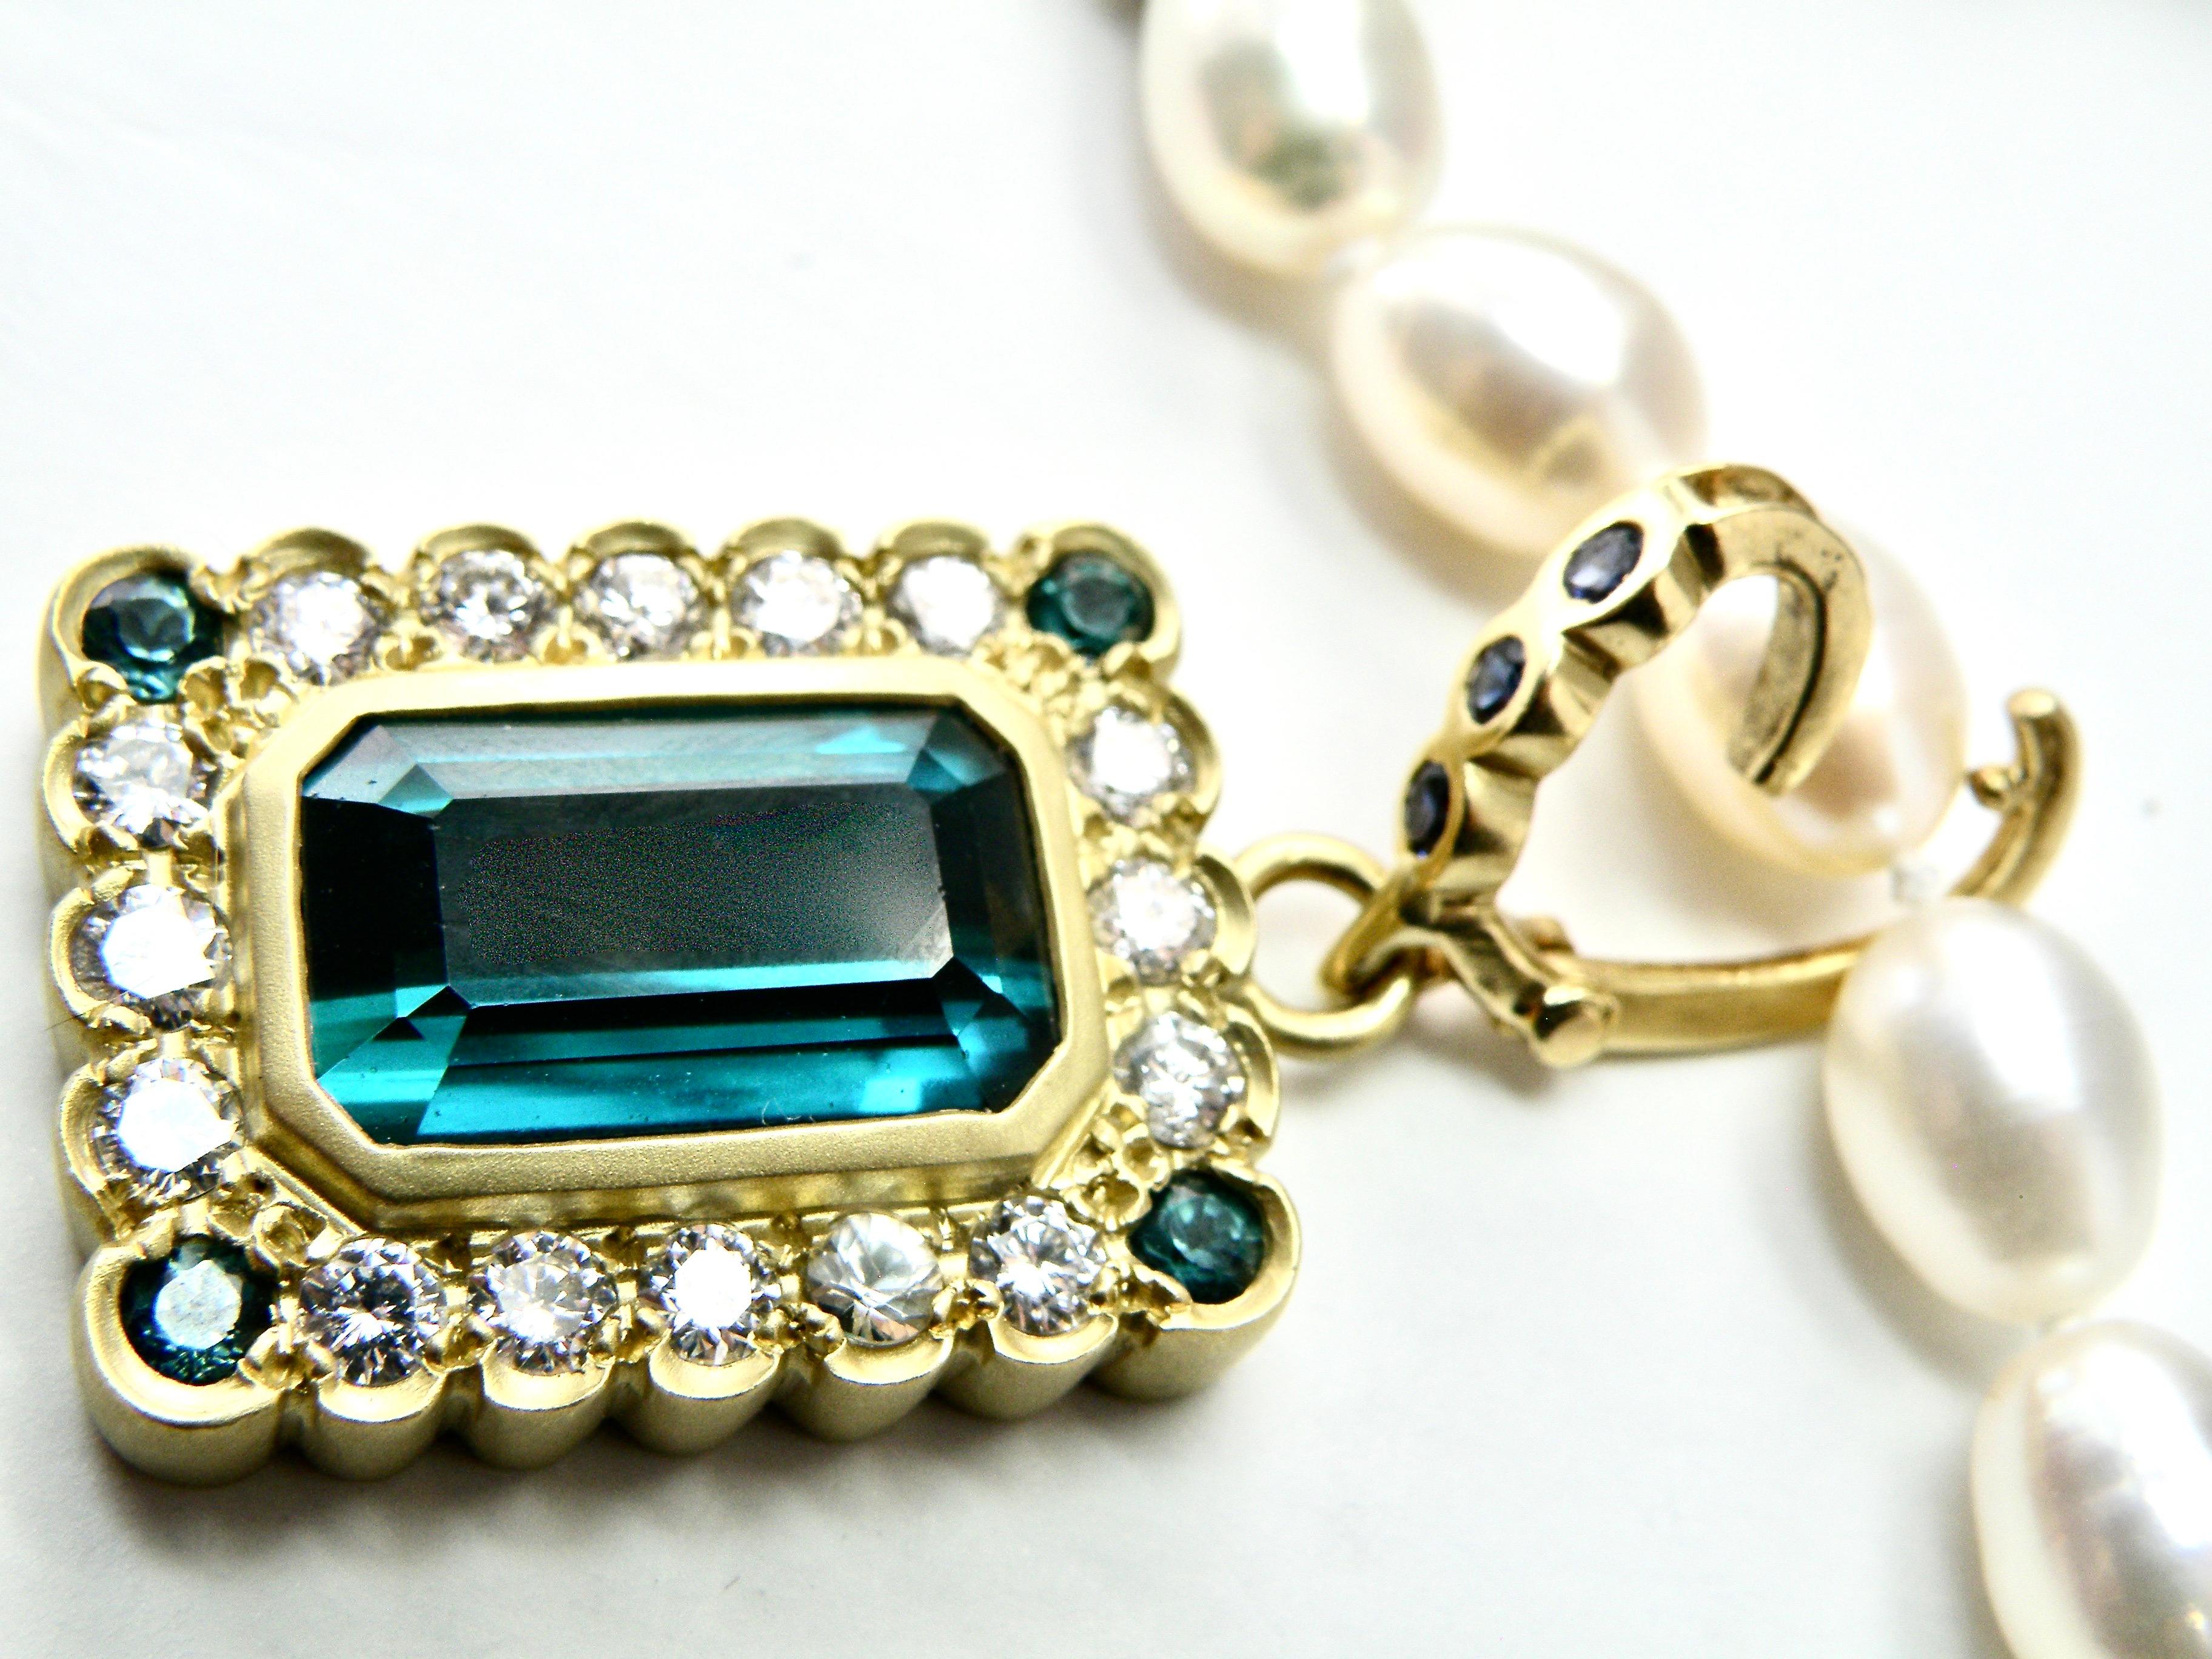 18K with diamonds surrounding magnificient green afghan tourmaline pendant